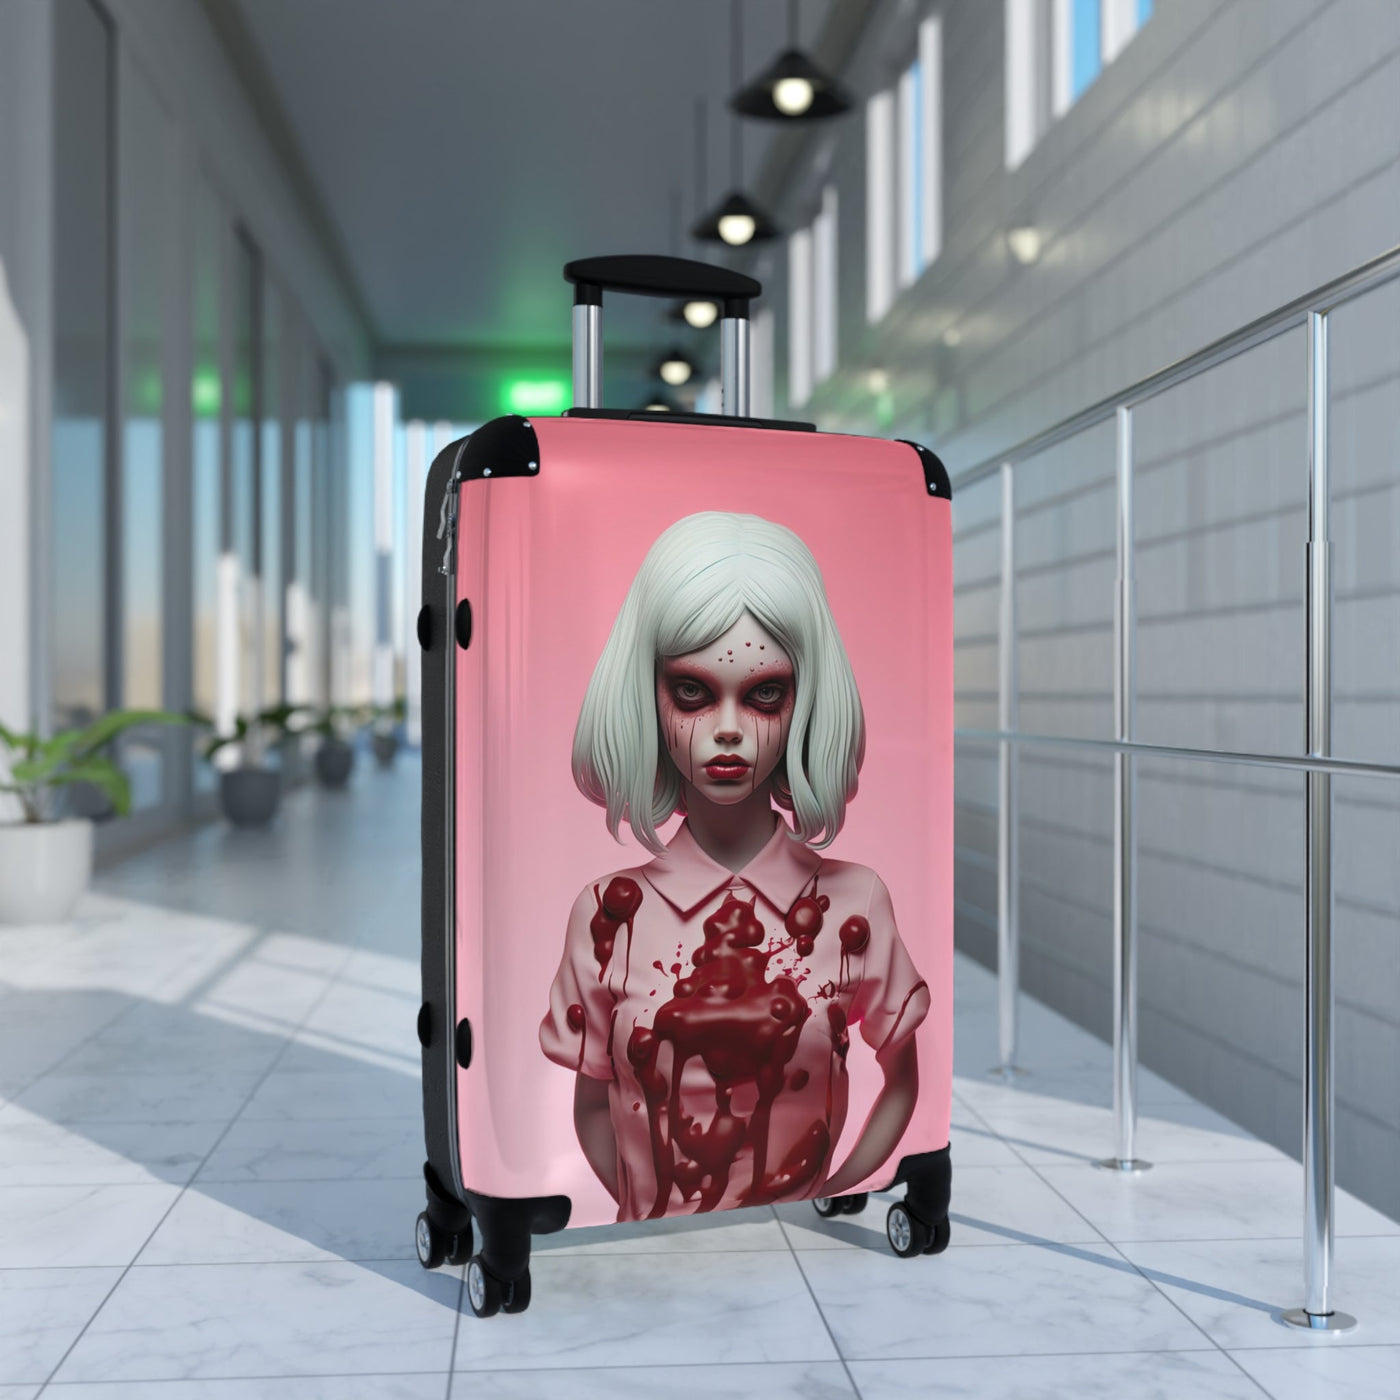 Cutie Choco-Doll Pop Surreal Travel Suitcase Luggage